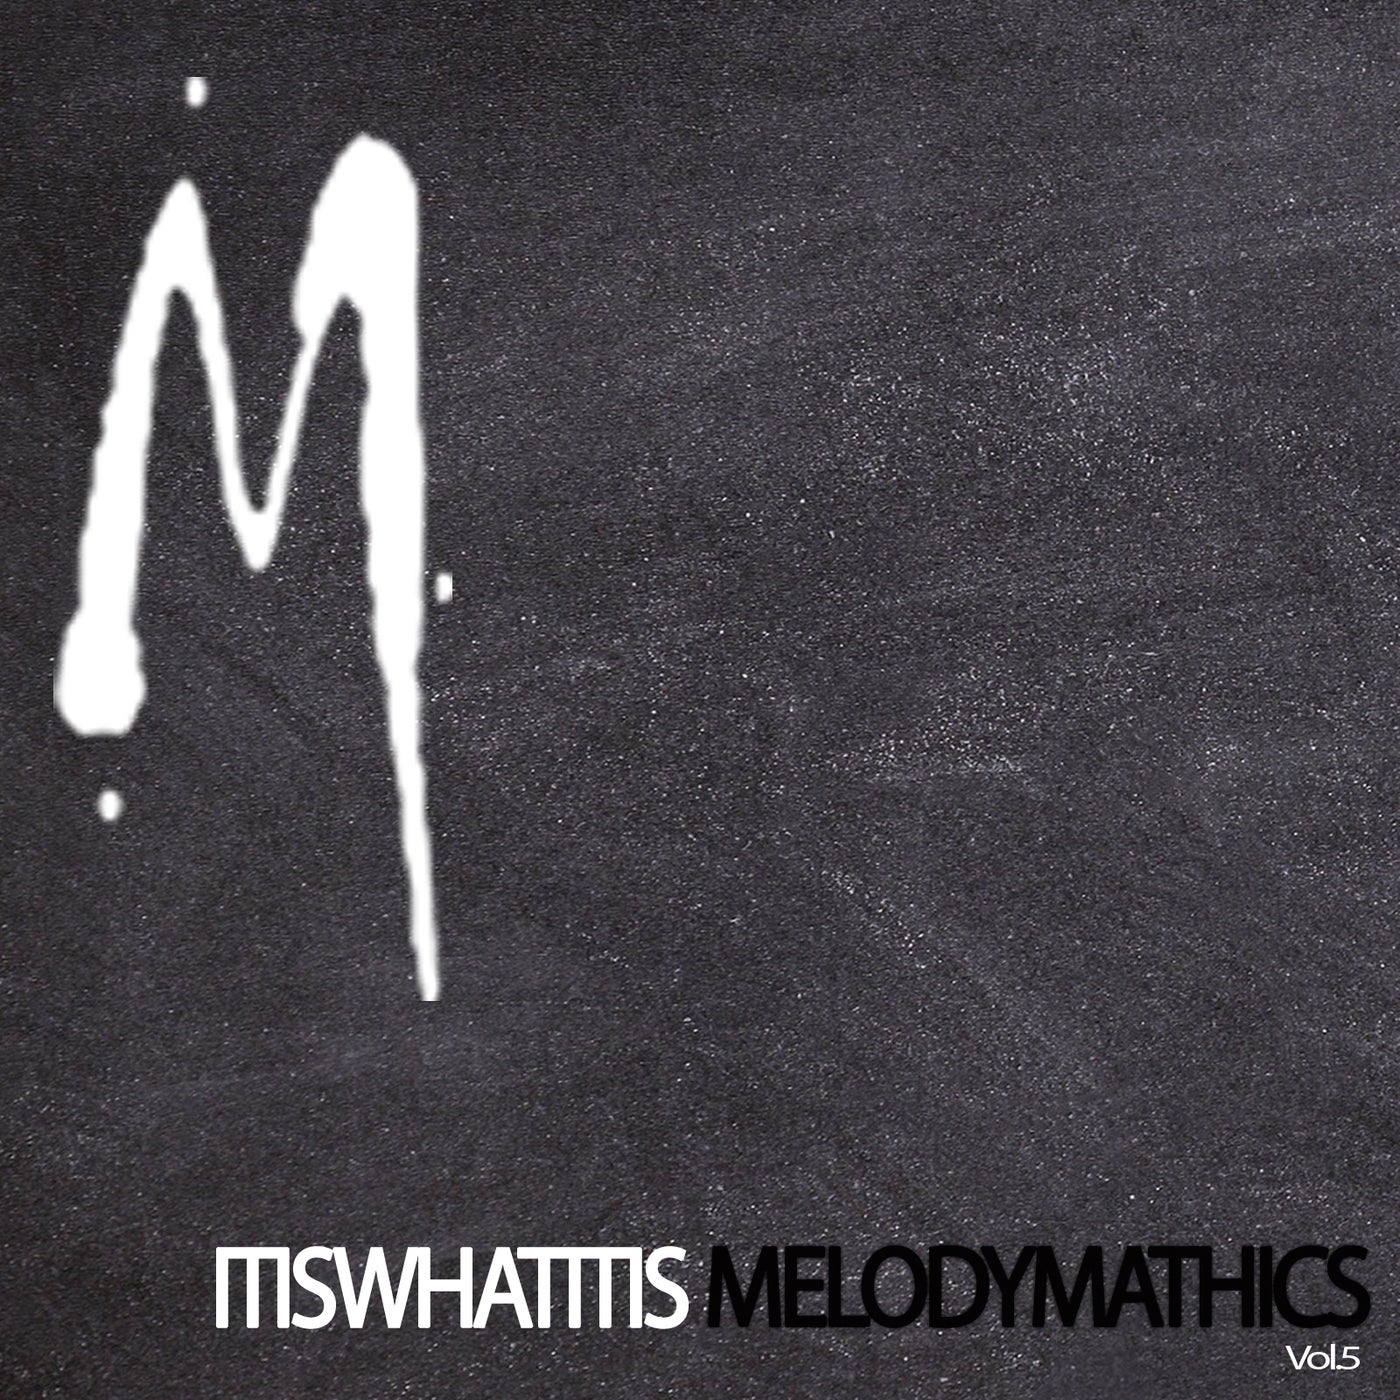 VA – This Is Melodymathics Vol.5